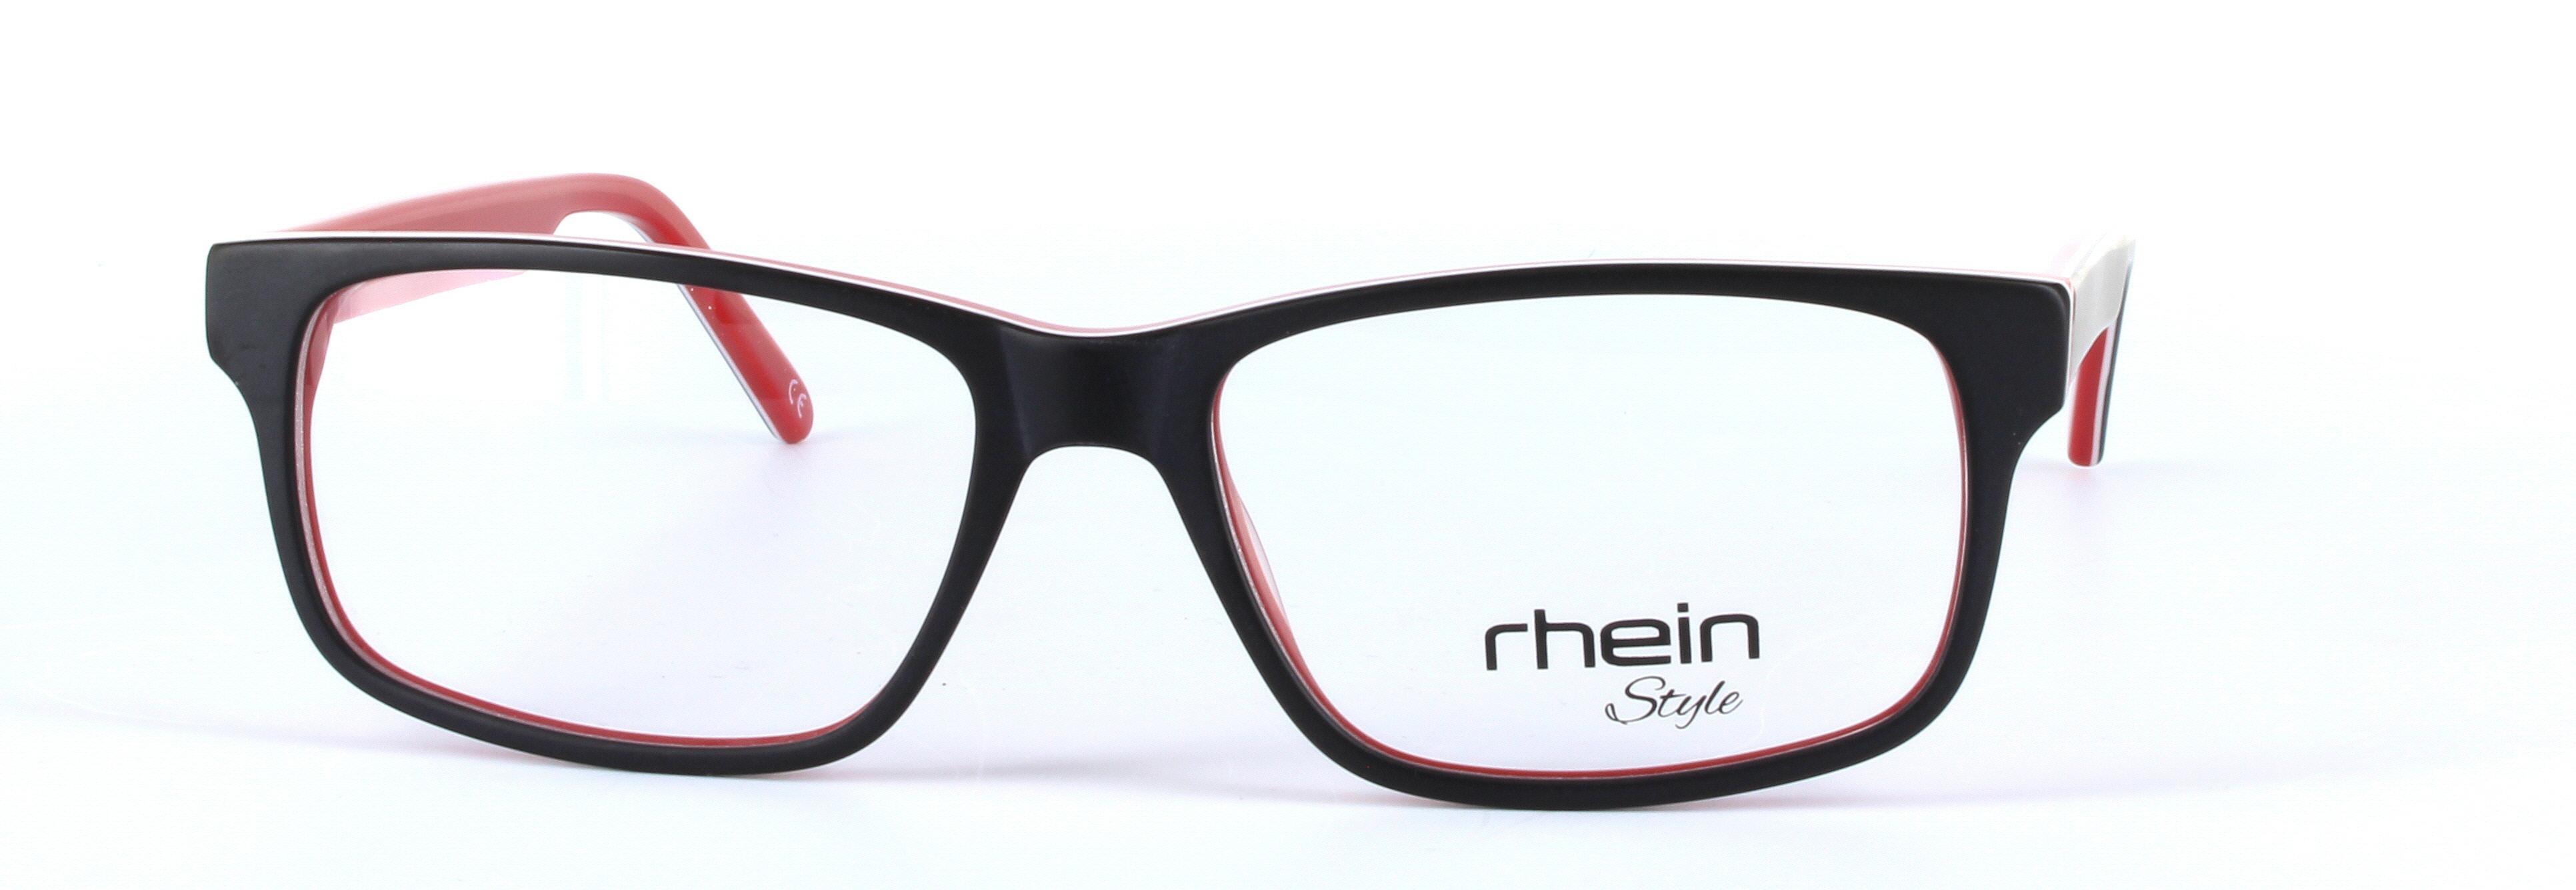 Carson Black and Red Full Rim Oval Rectangular Plastic Glasses - Image View 5